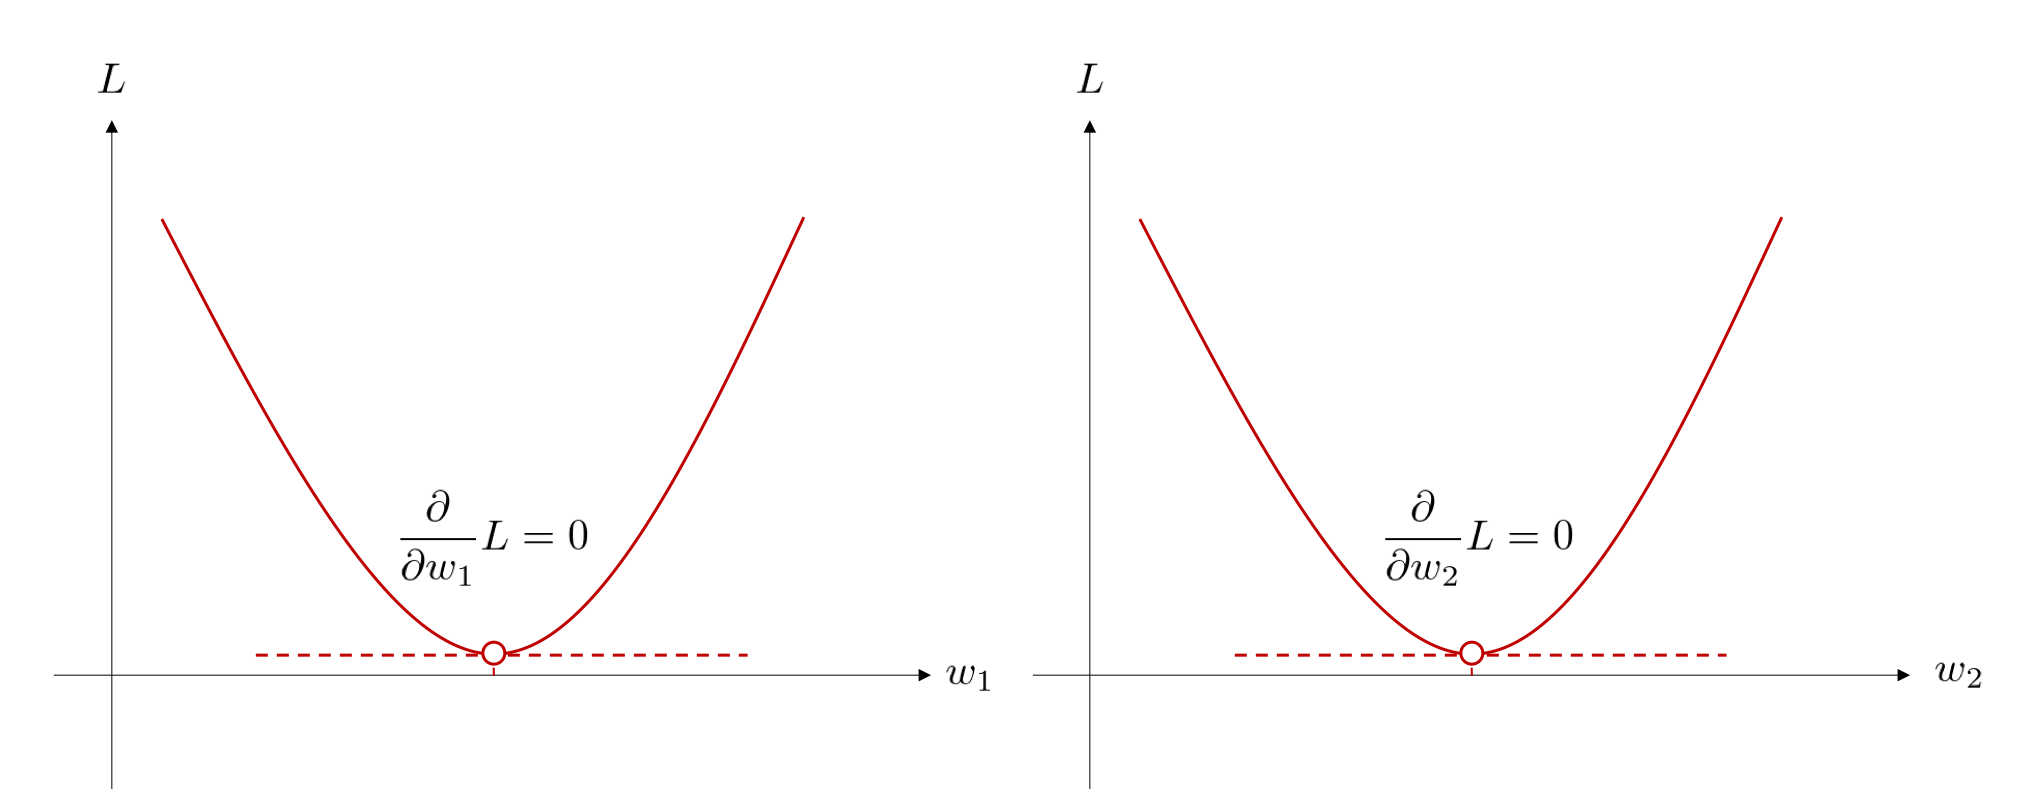 目的関数の概形（2 次元）